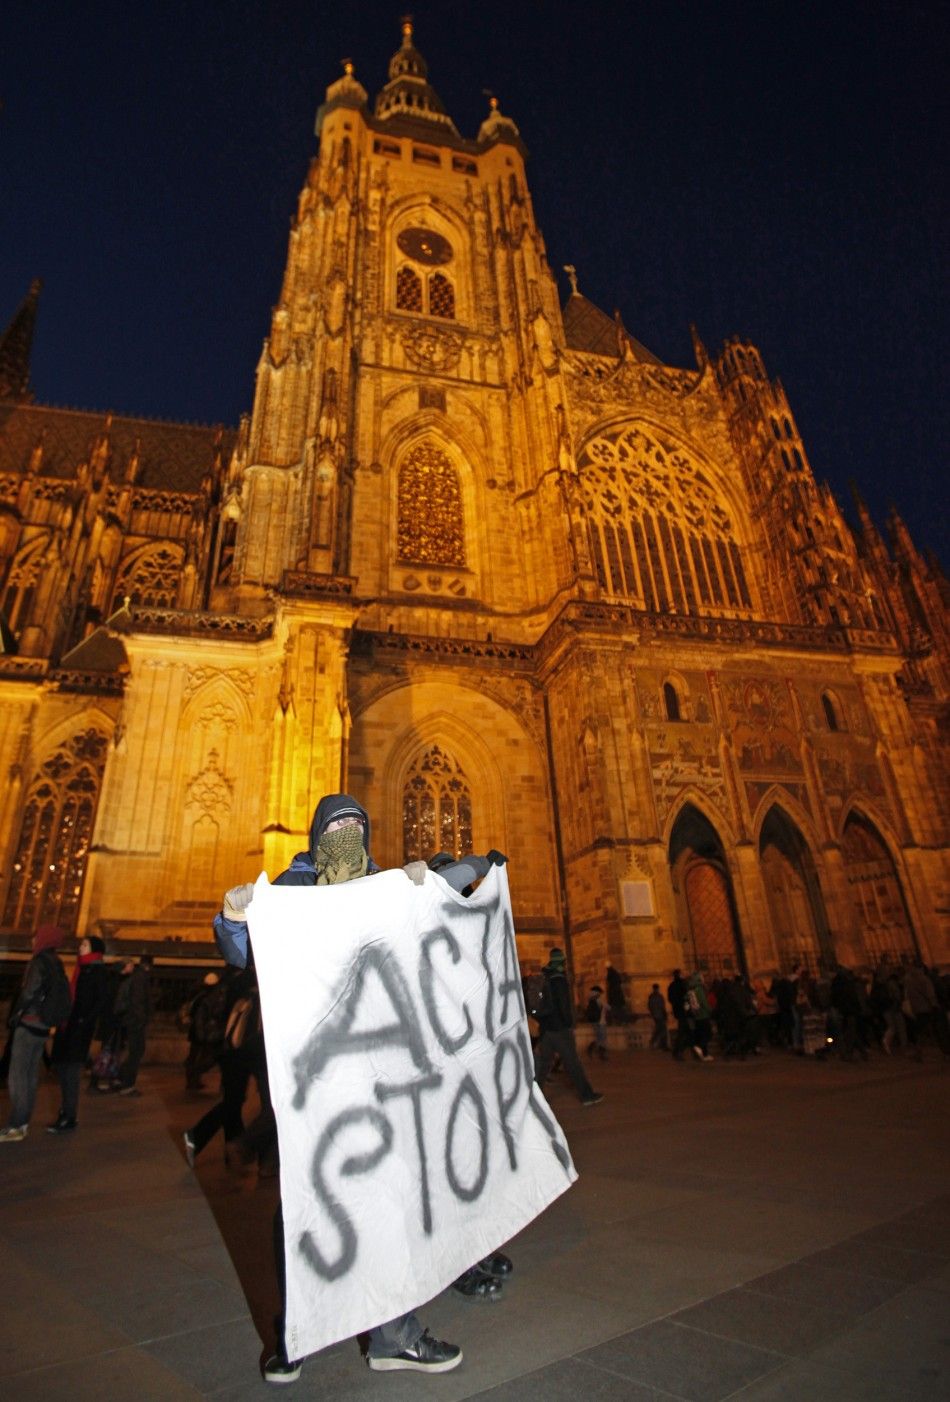 ACTA Protest